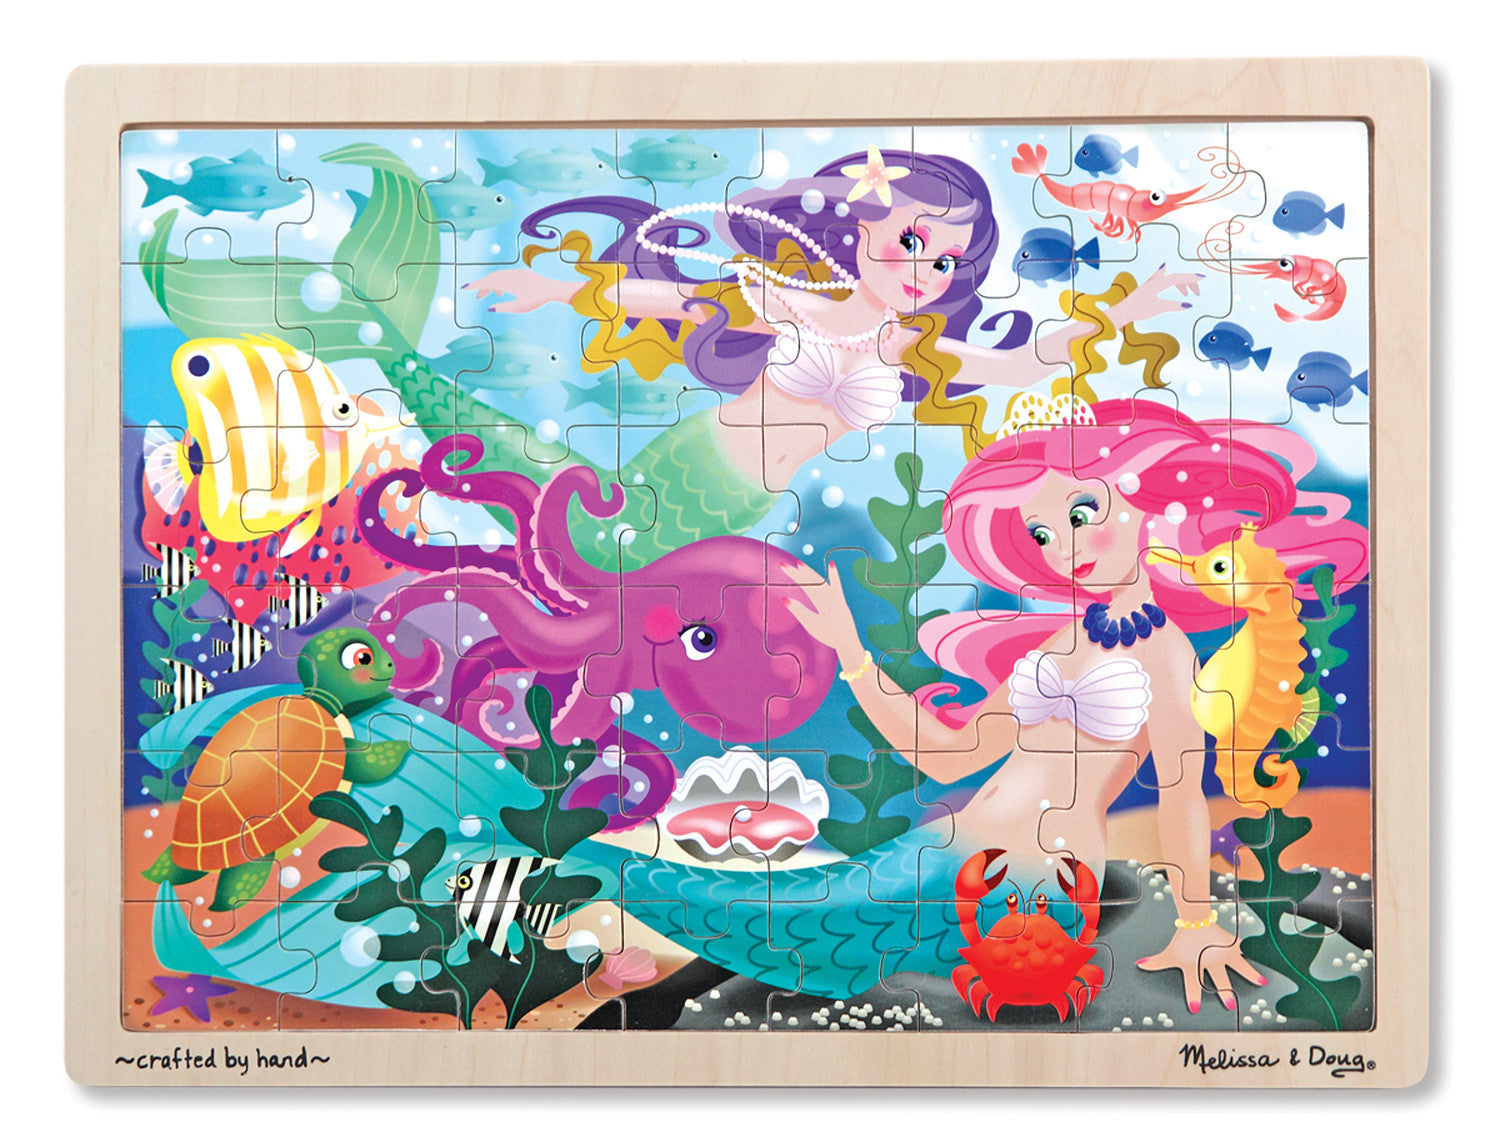 Melissa & Doug Mermaid Fantasea Wooden Jigsaw Puzzle - 48pc